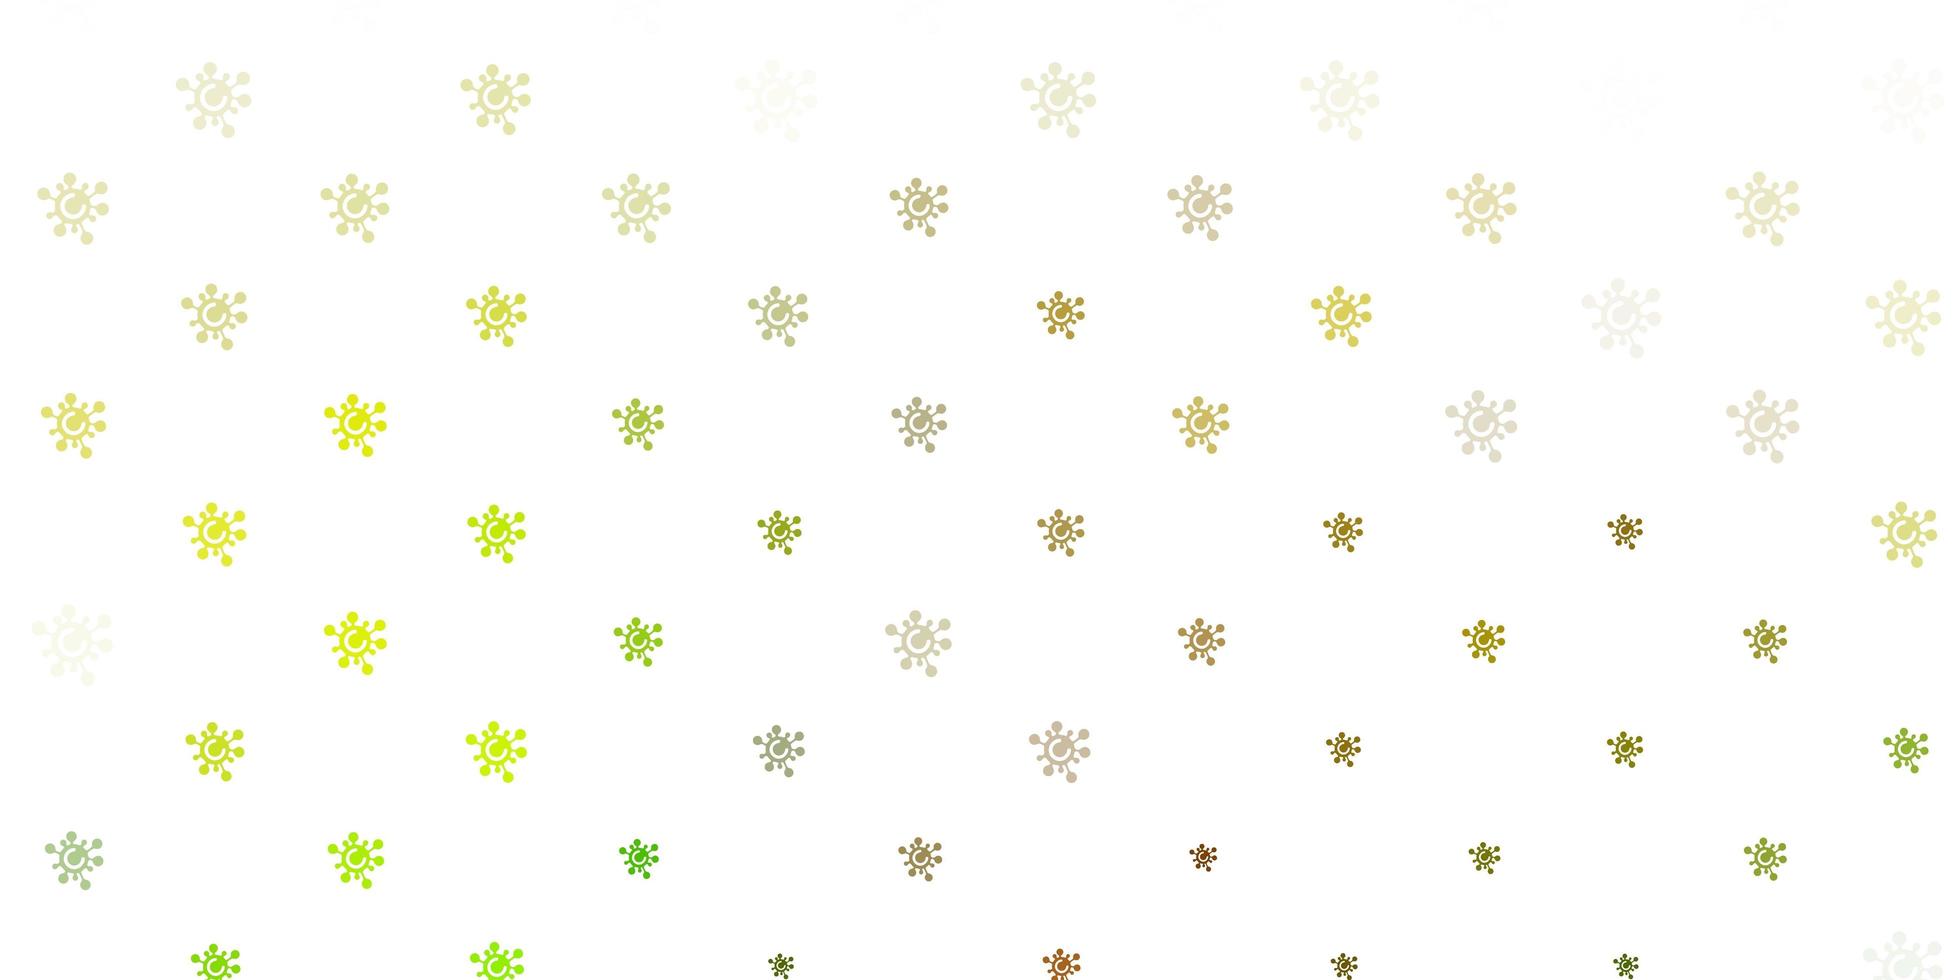 Light Green, Yellow vector backdrop with virus symbols.